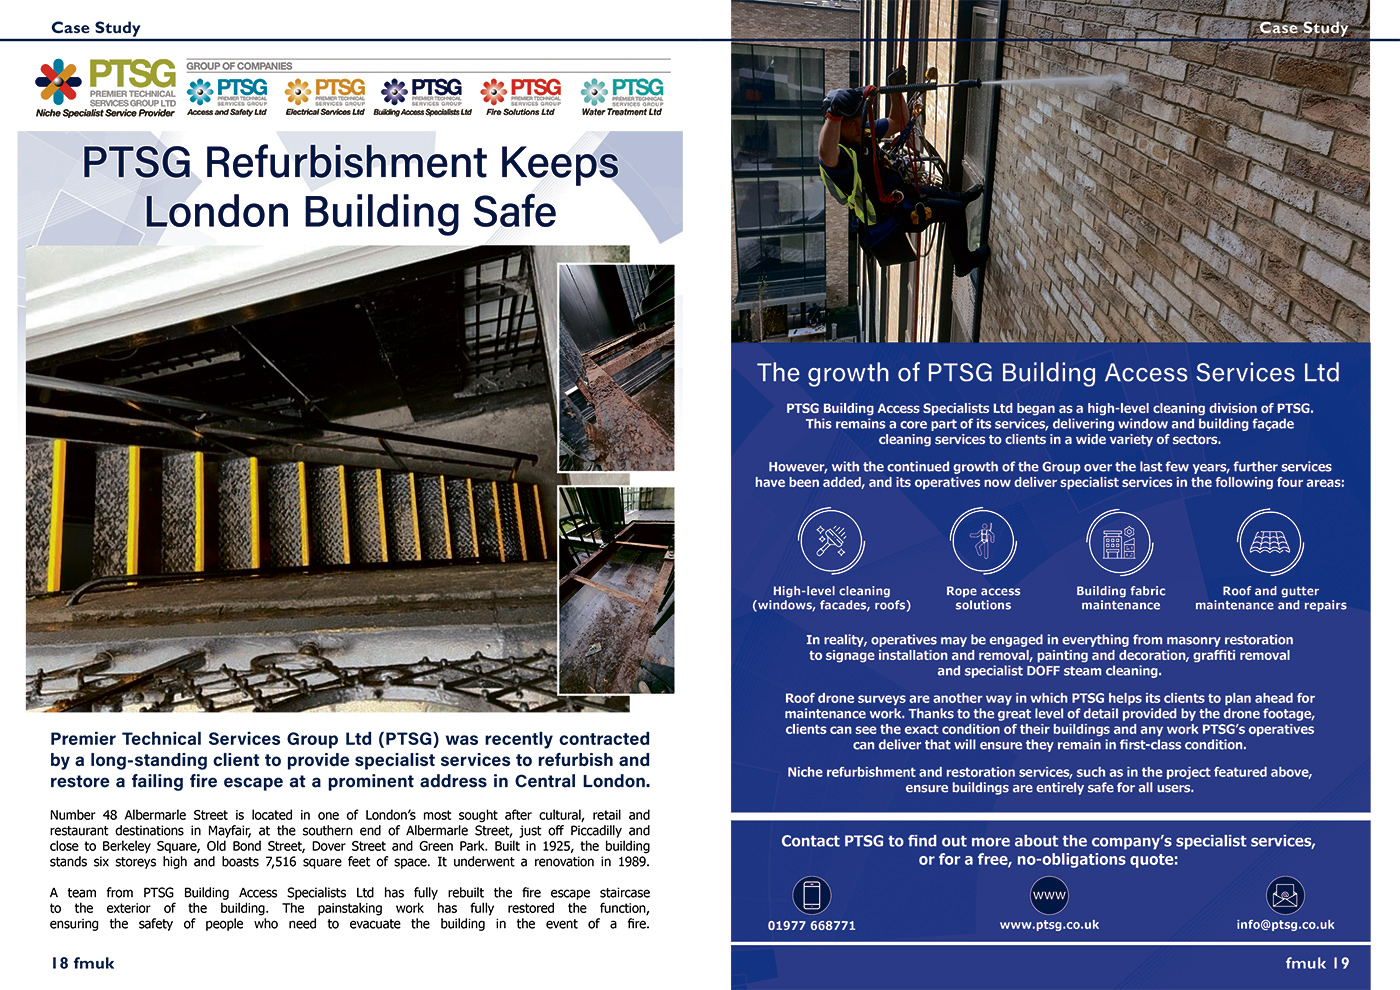 PTSG Refurbishment Project Keeps London Building Safe